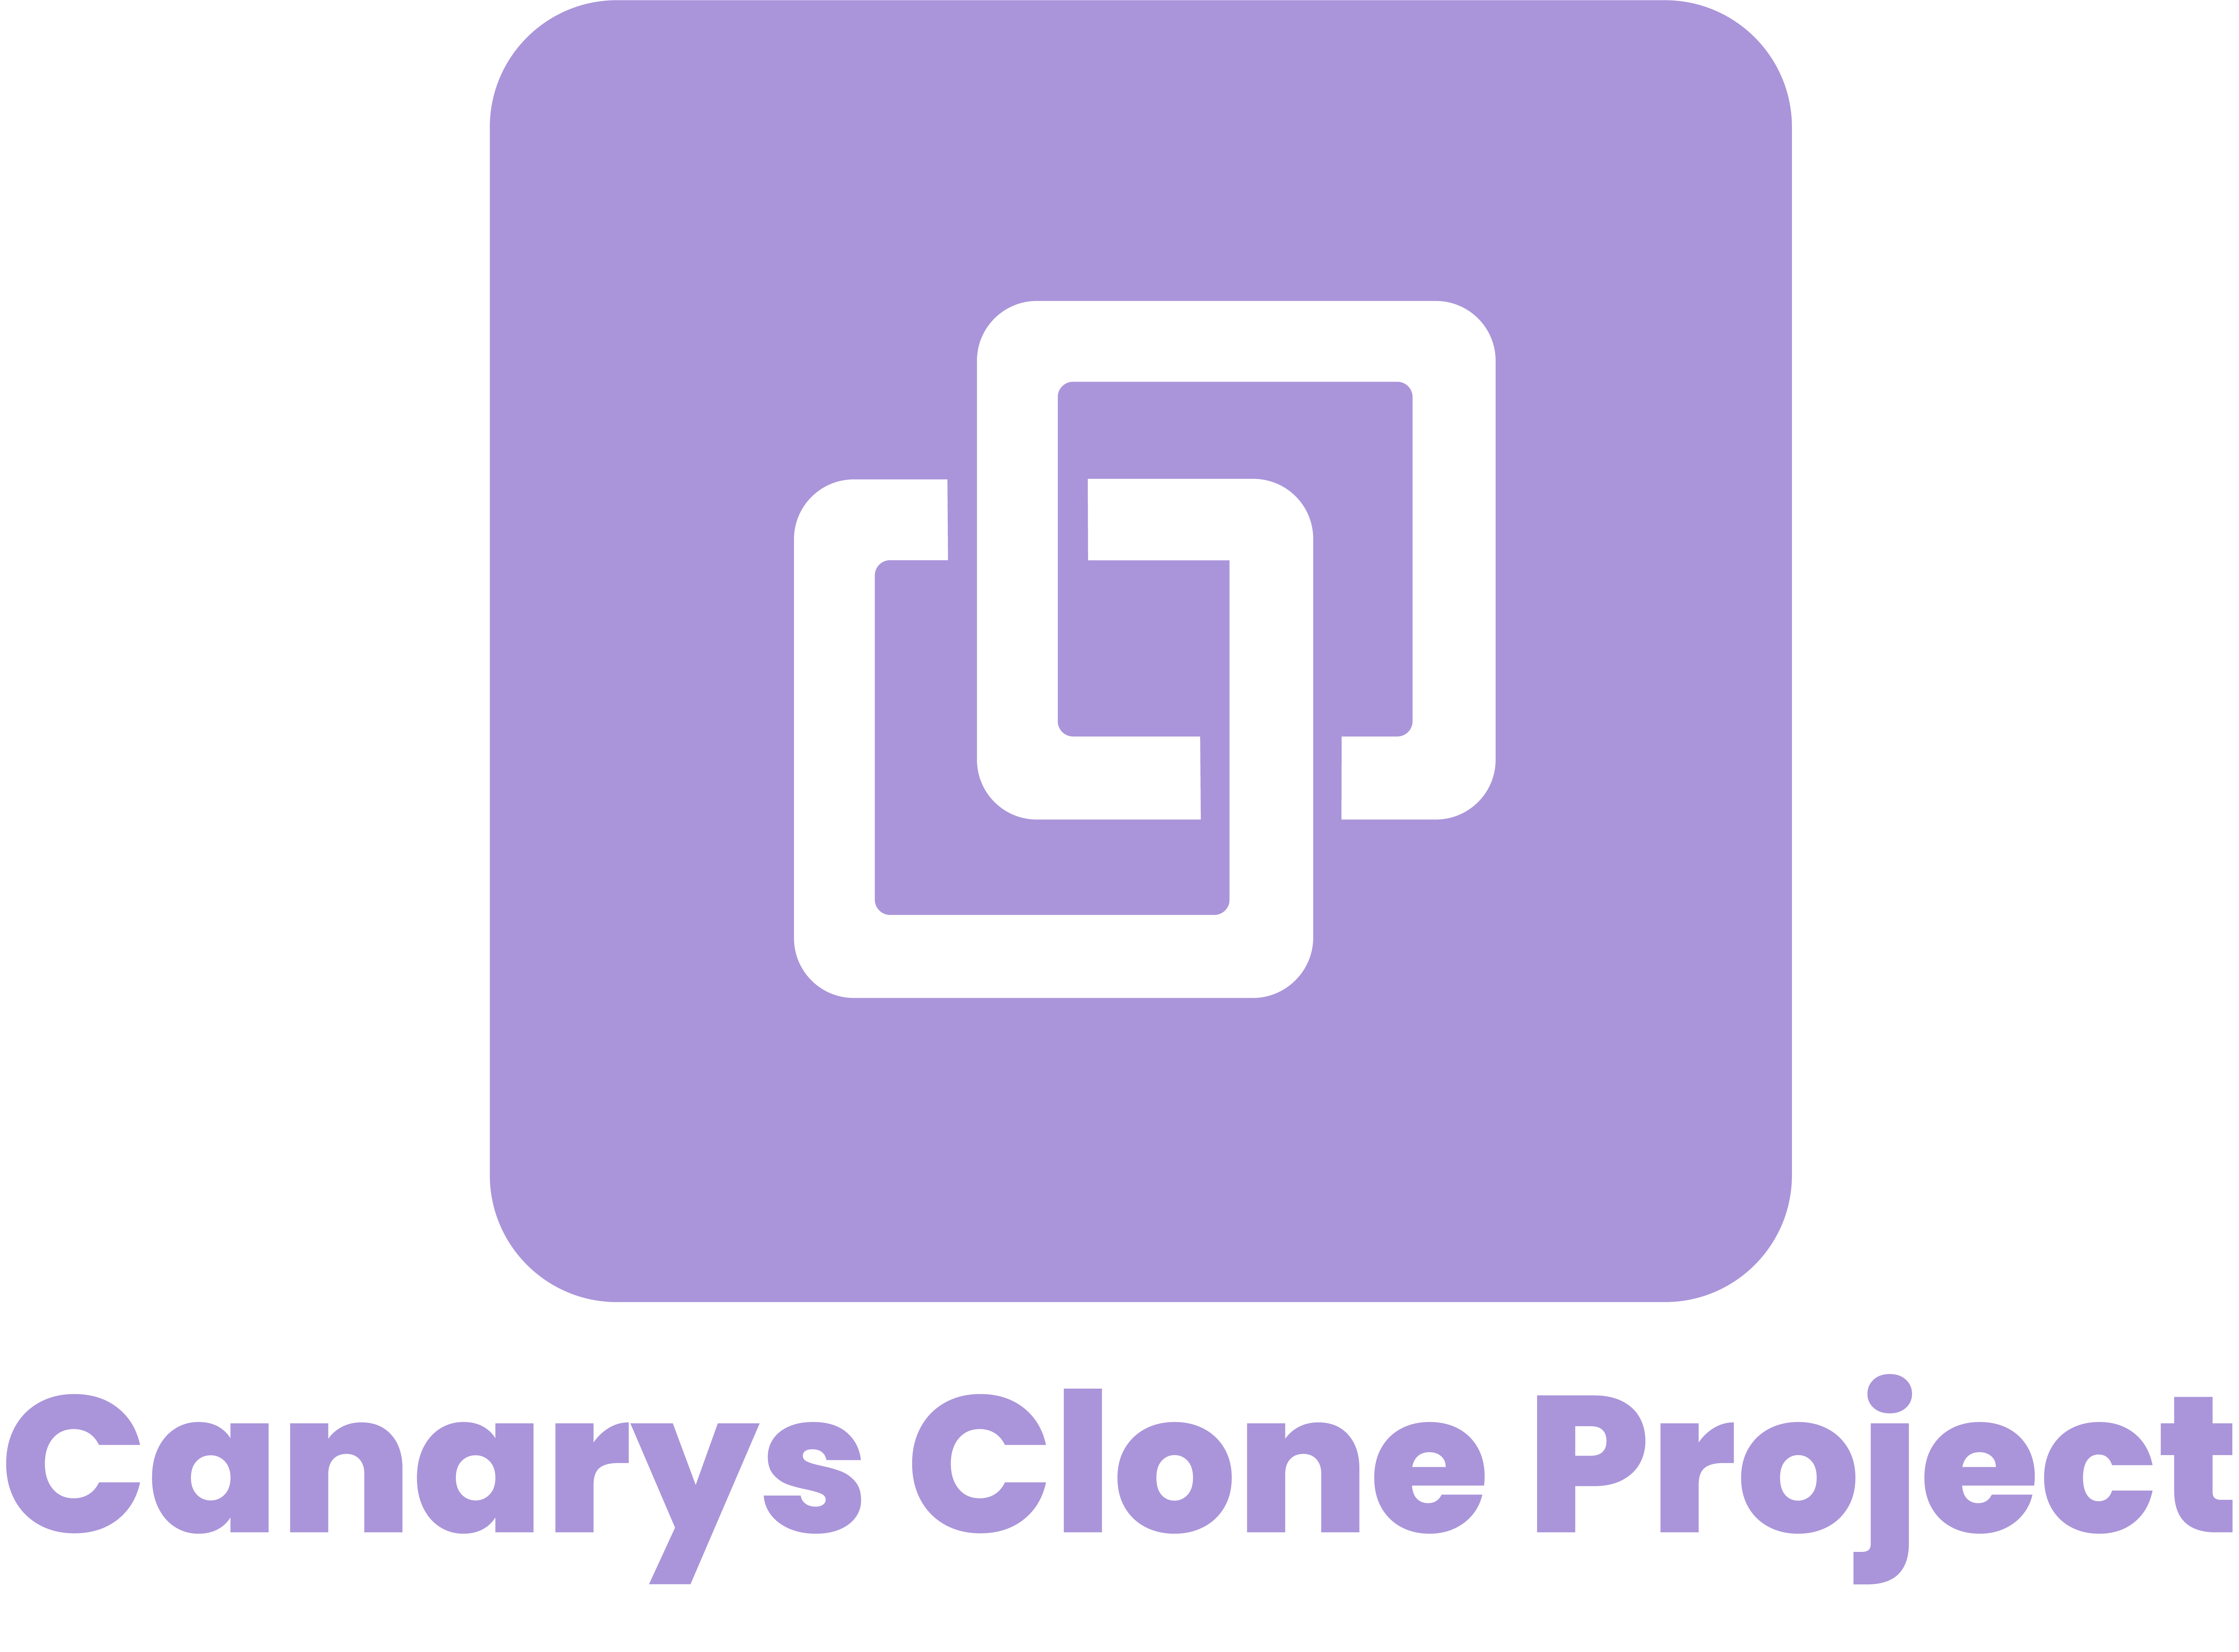 Canarys Clone Project